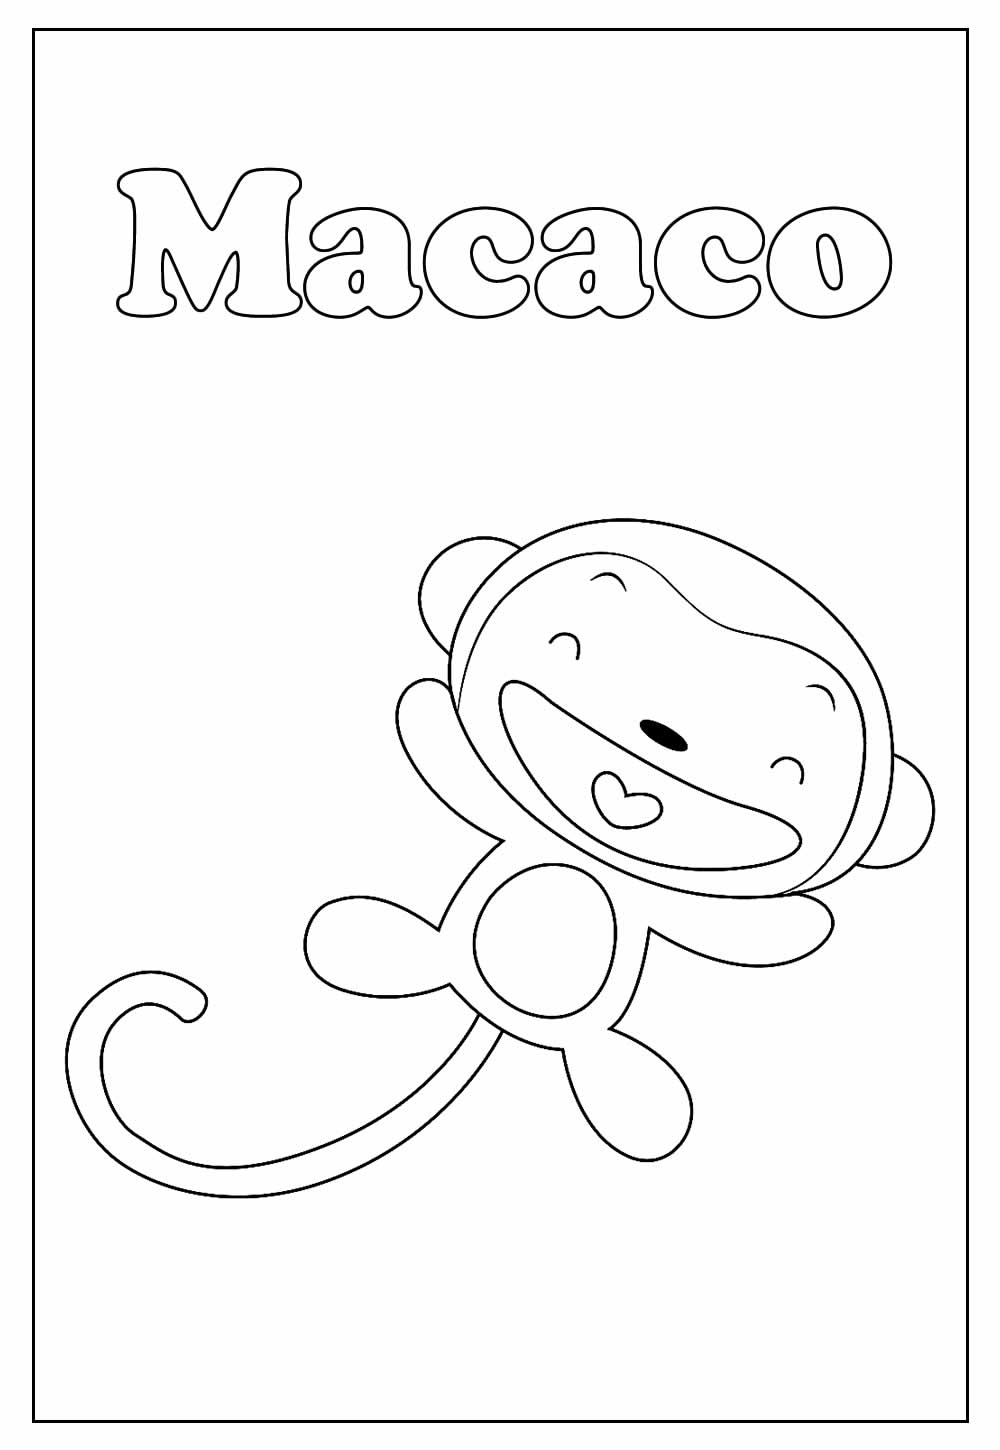 Desenho Educativo de Macaco para colorir